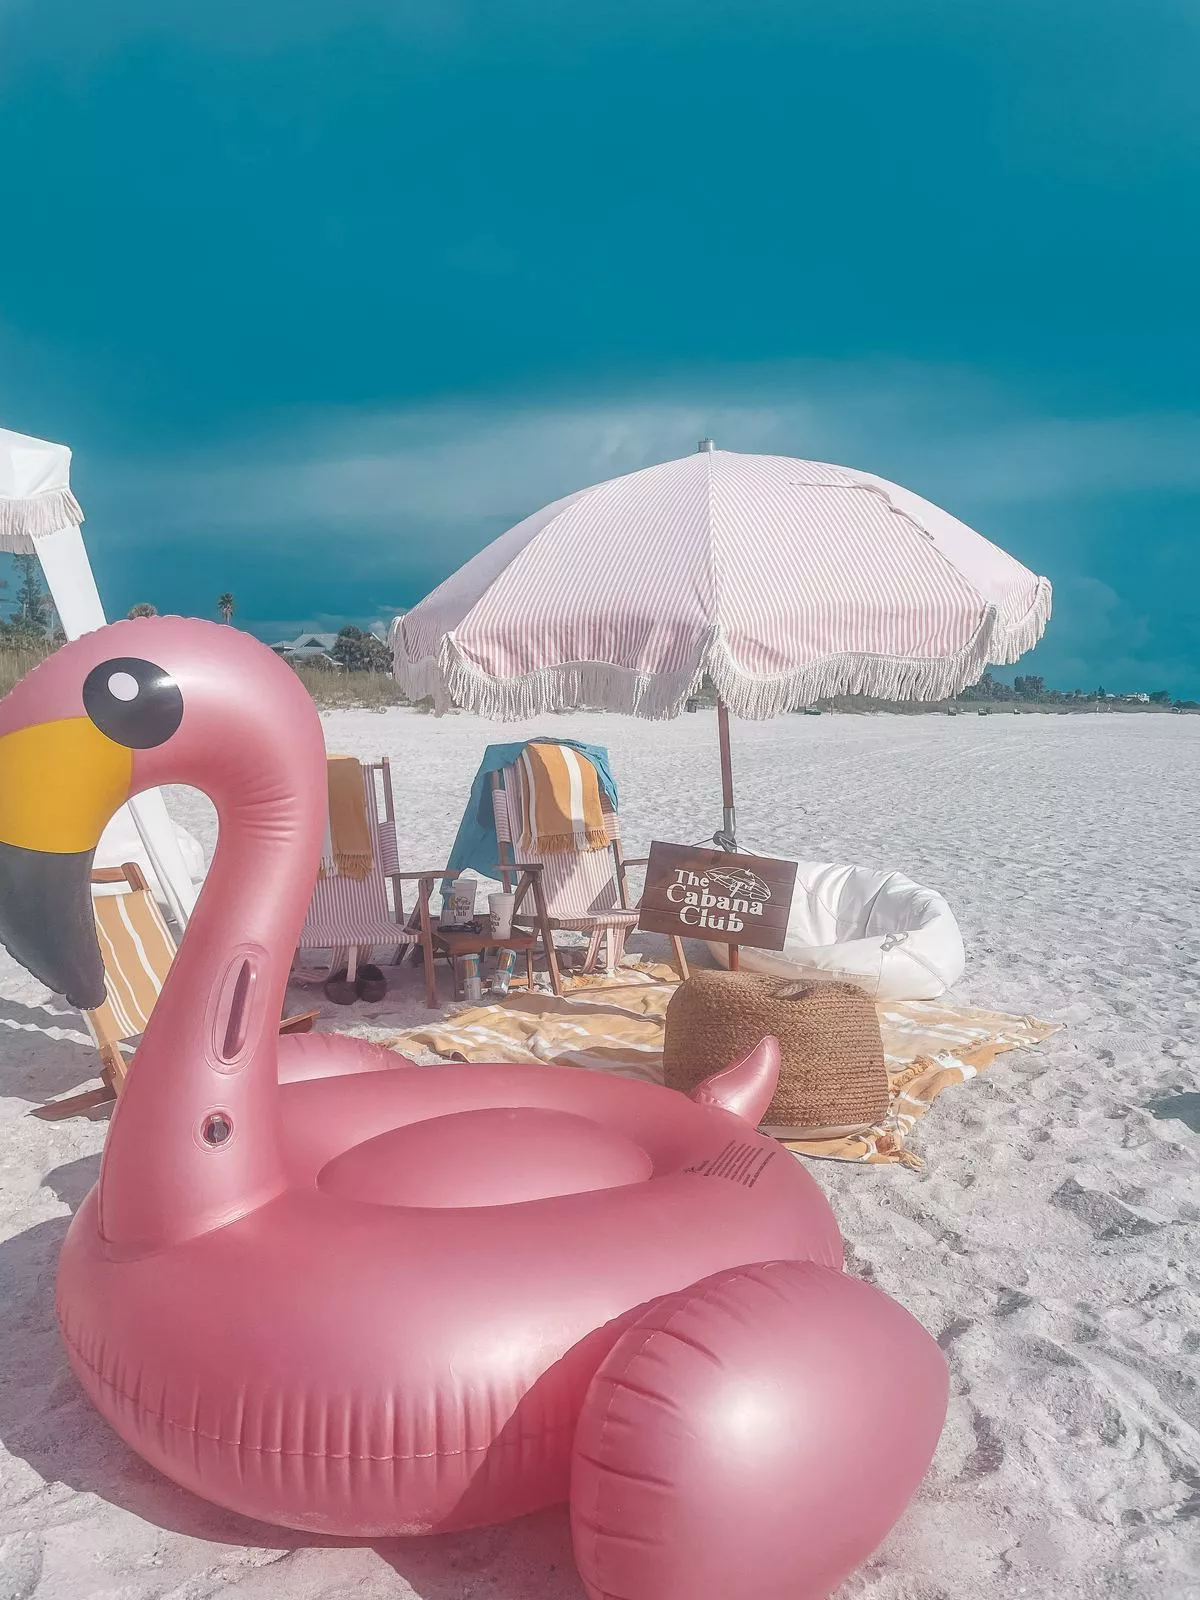 Flamingo float and Cabana Club setup on St. Pete Beach Florida for a florida bachelorette